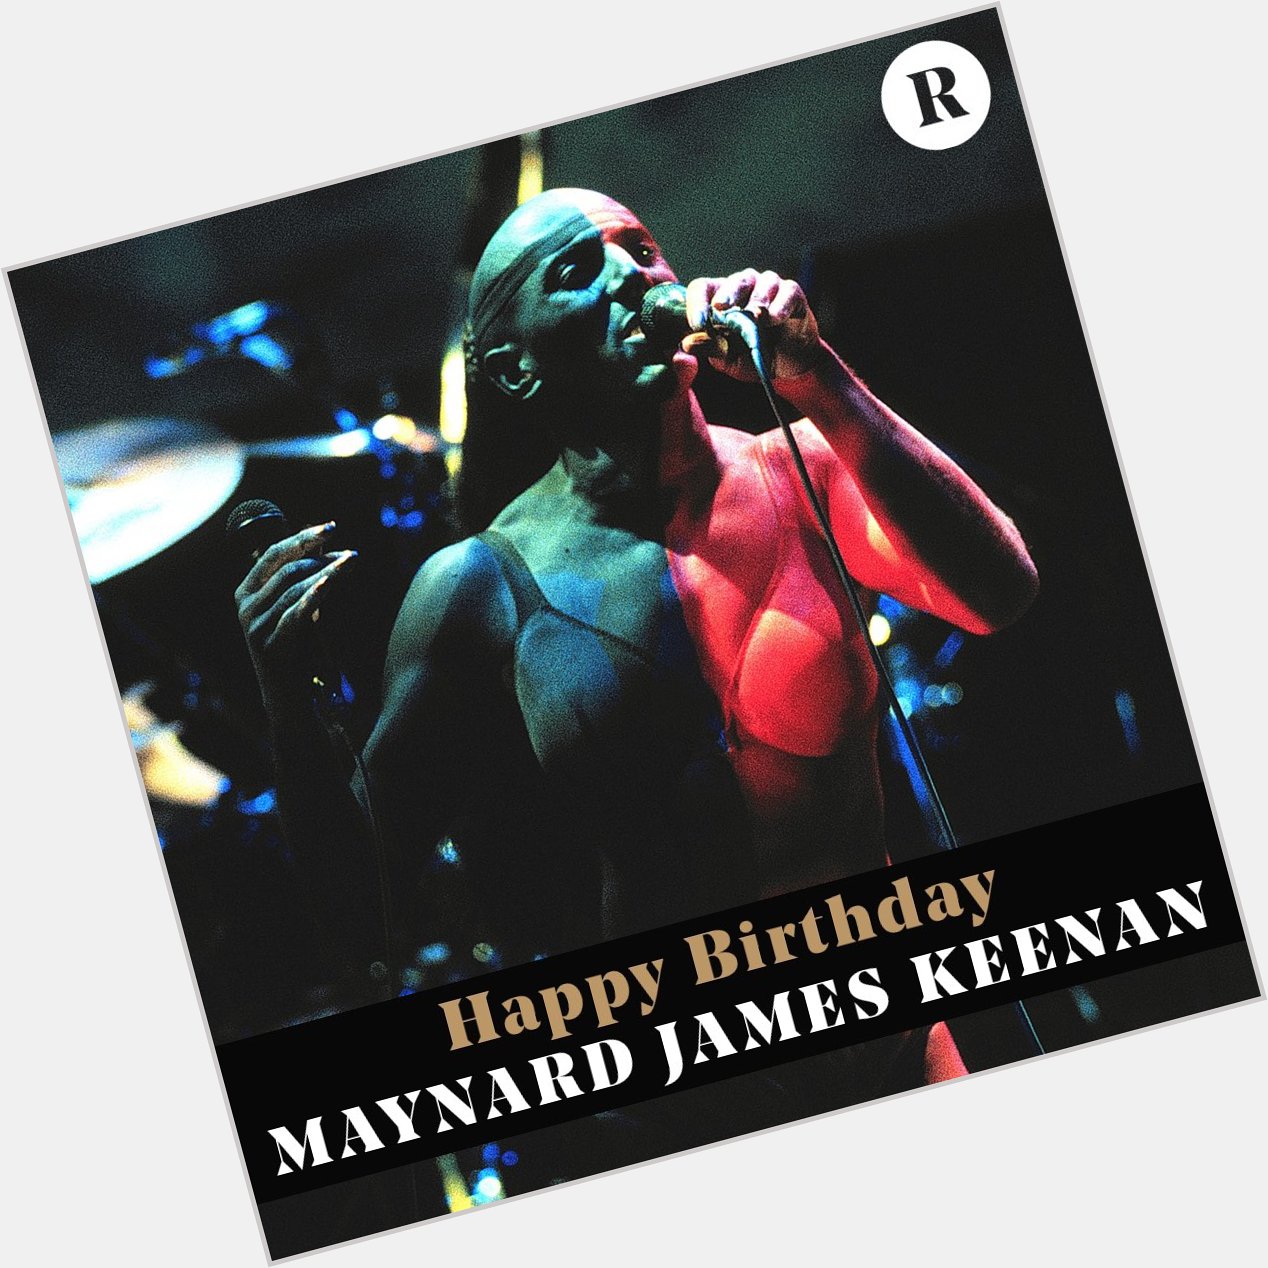 Happy Birthday Maynard James Keenan.   